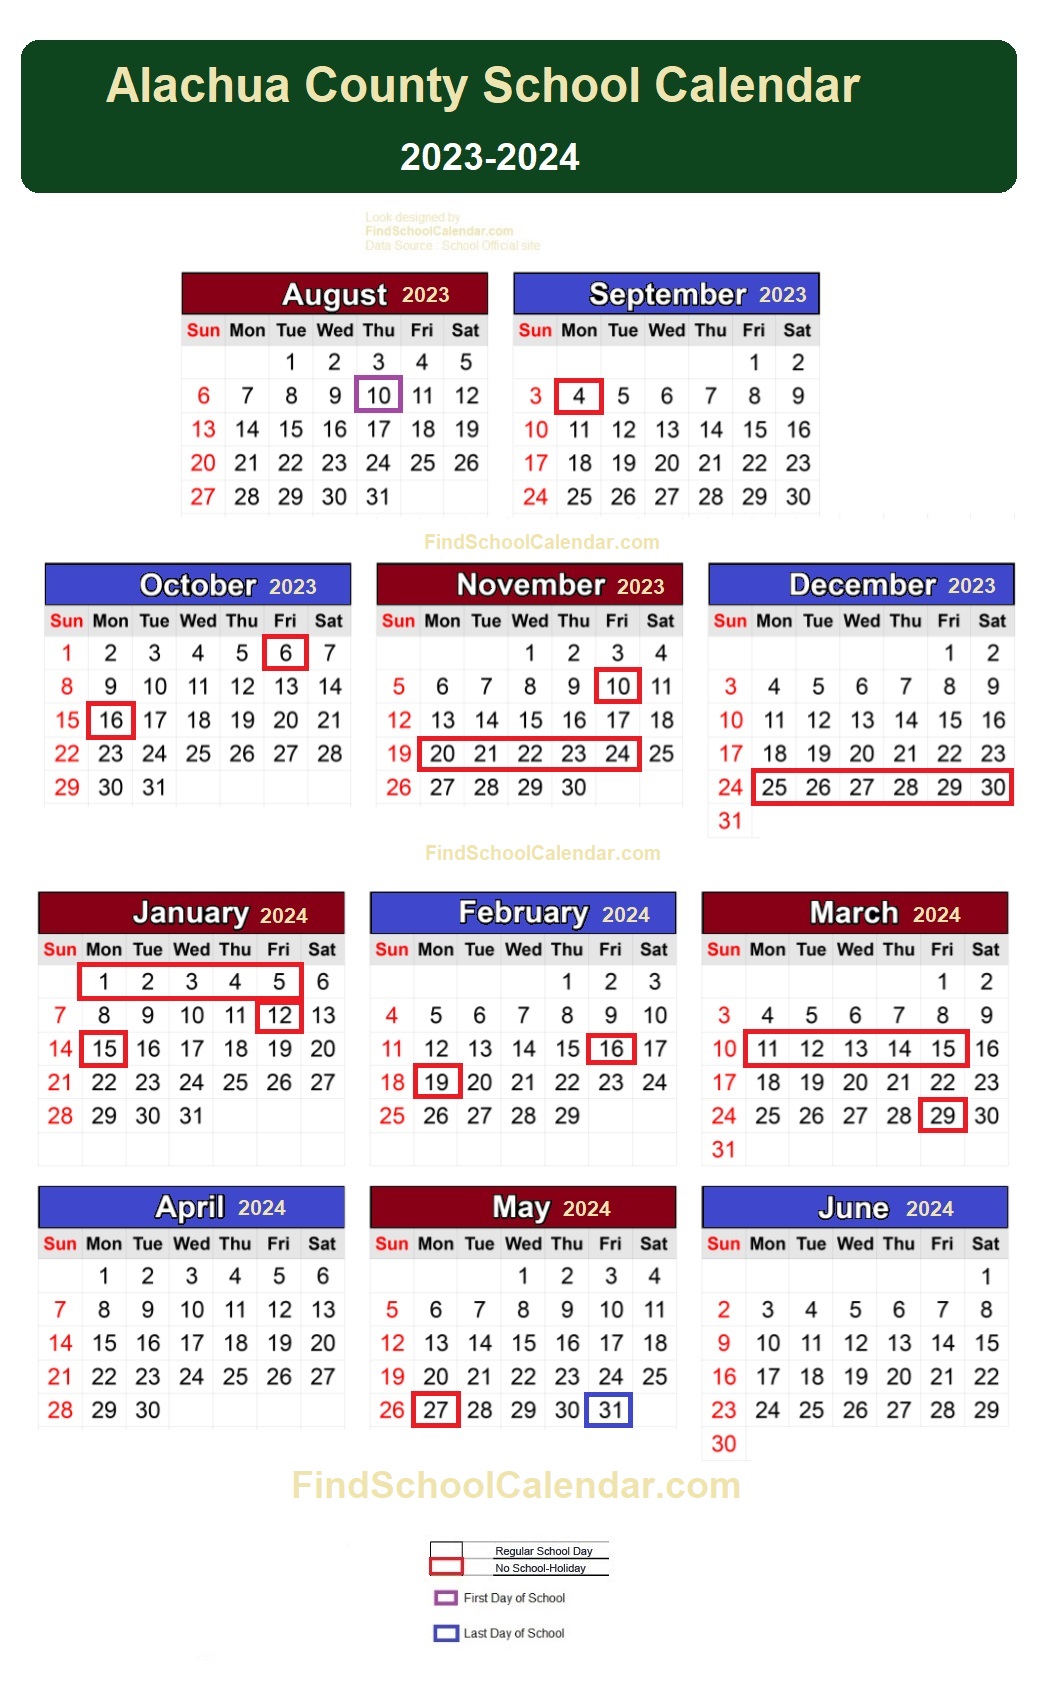 Alachua County Public Schools Calendar 2023-2024